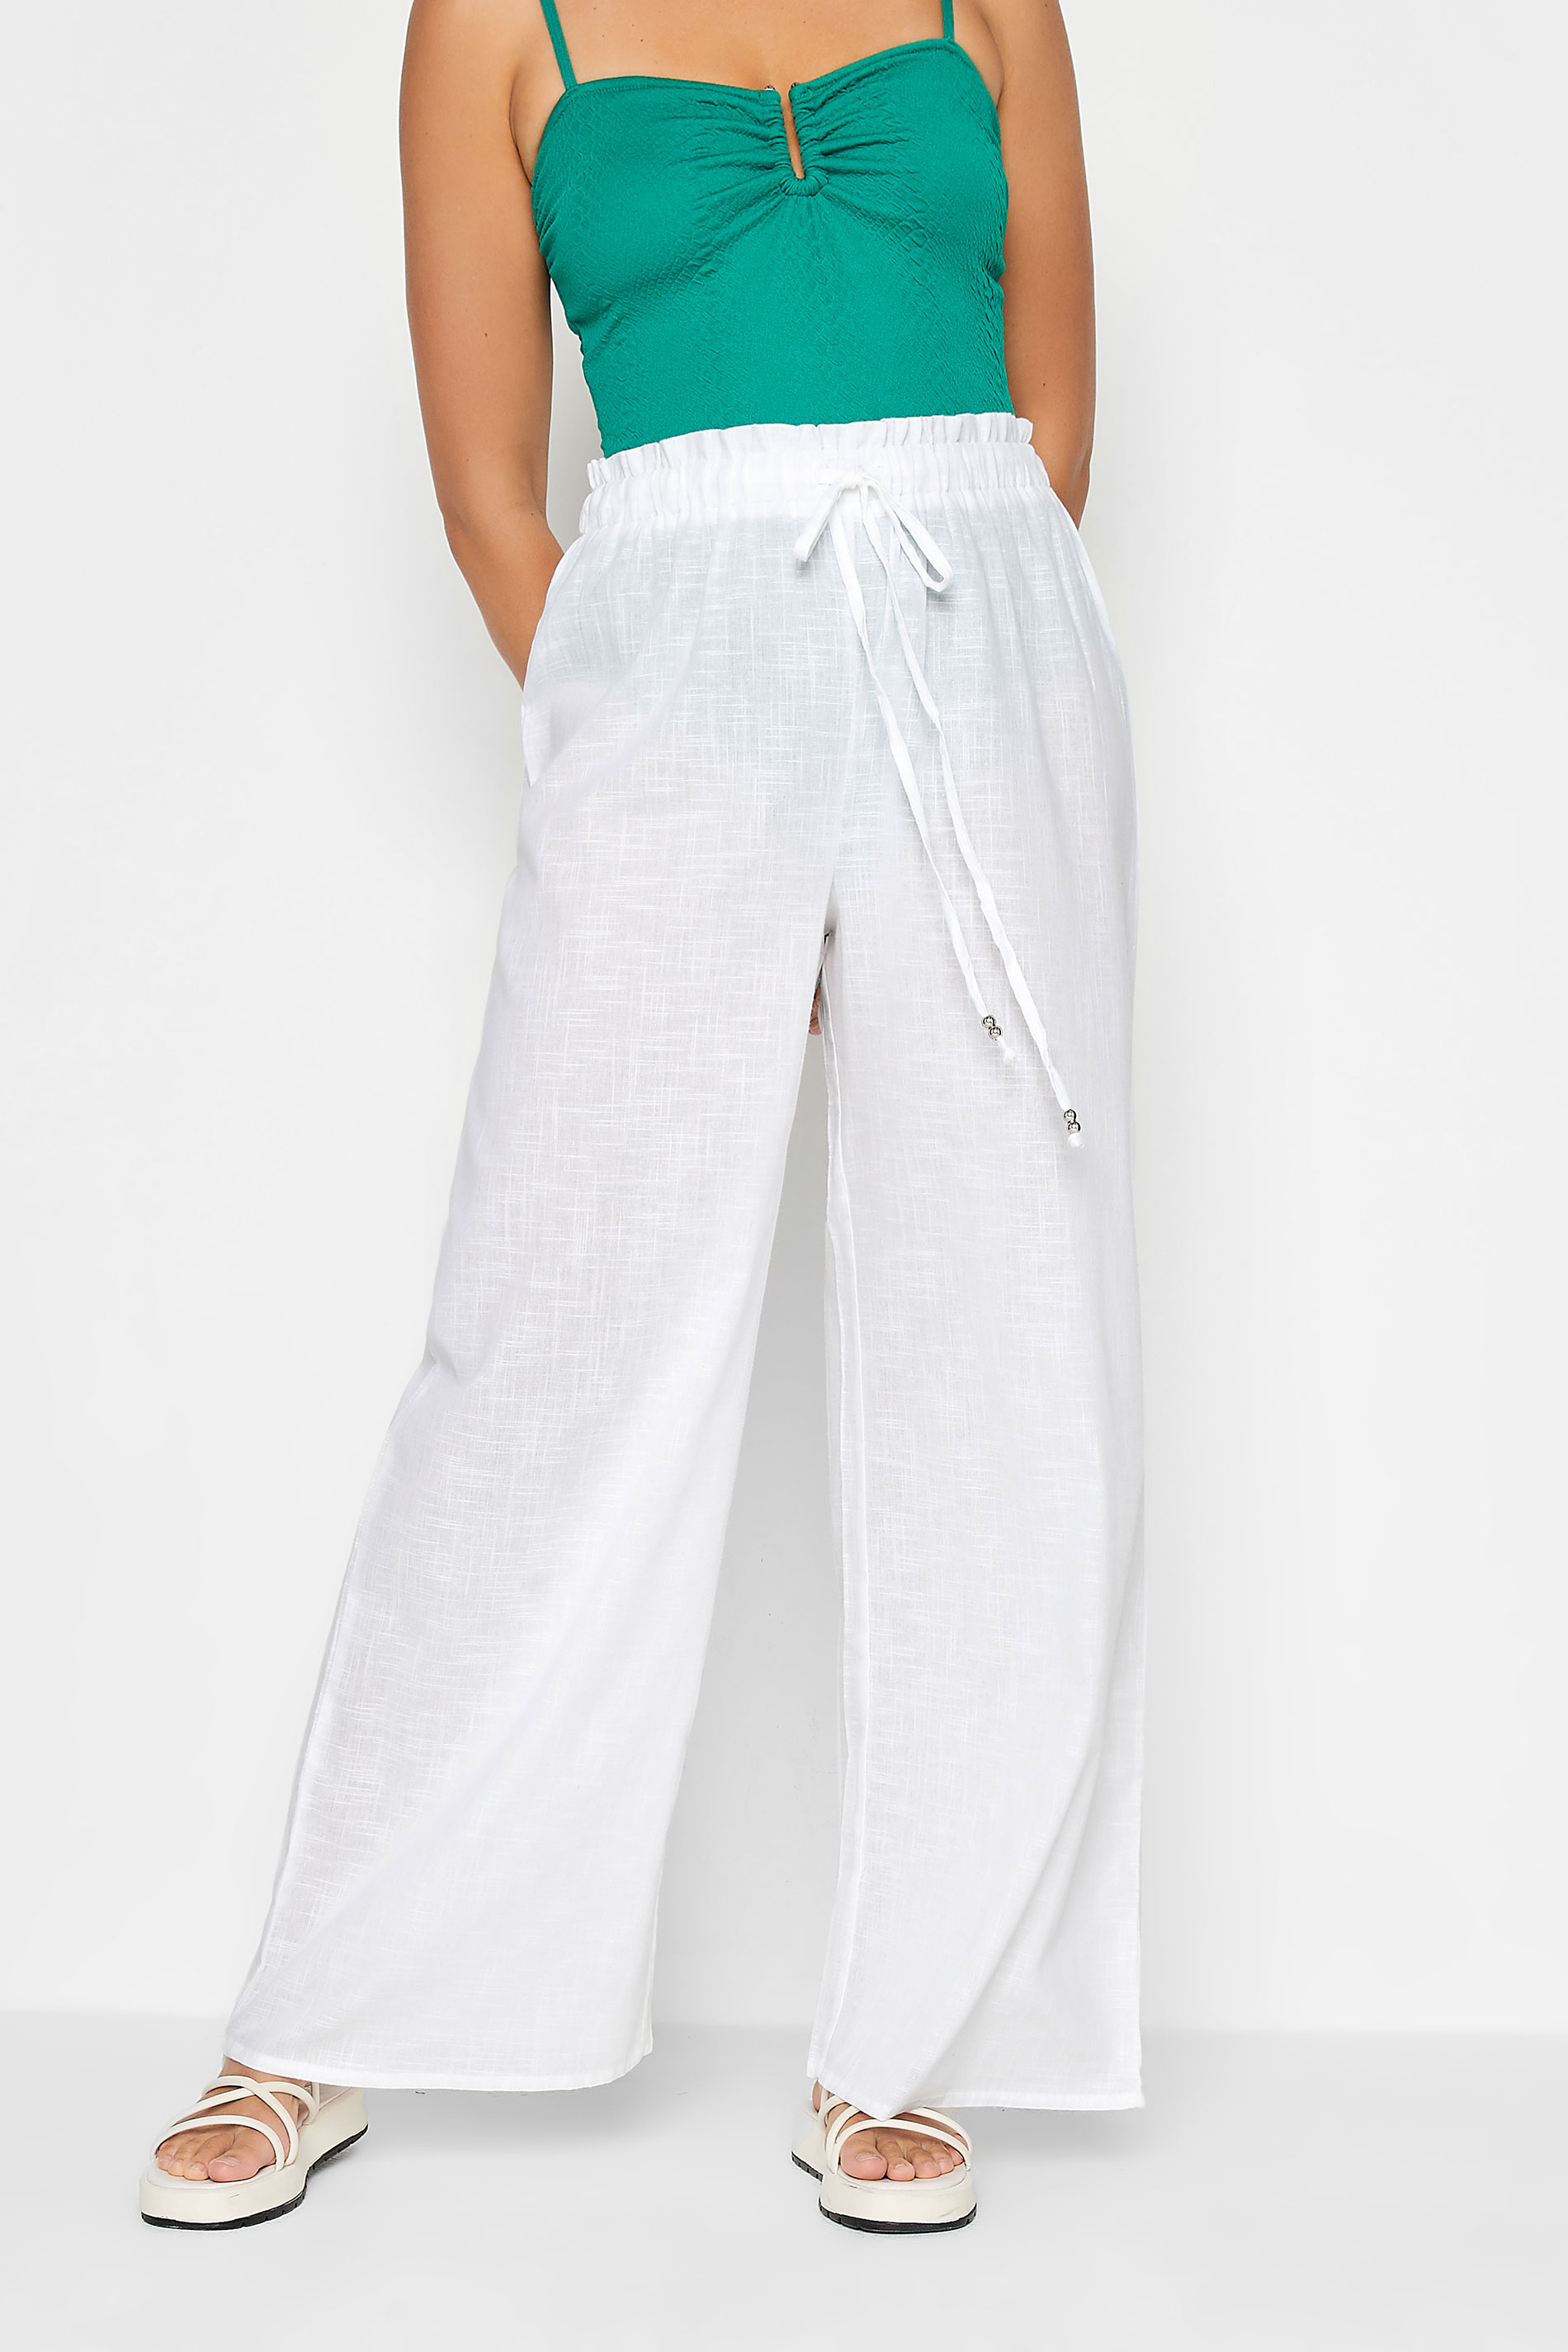 LTS Tall Women's White Cotton Wide Leg Beach Trousers | Long Tall Sally  1